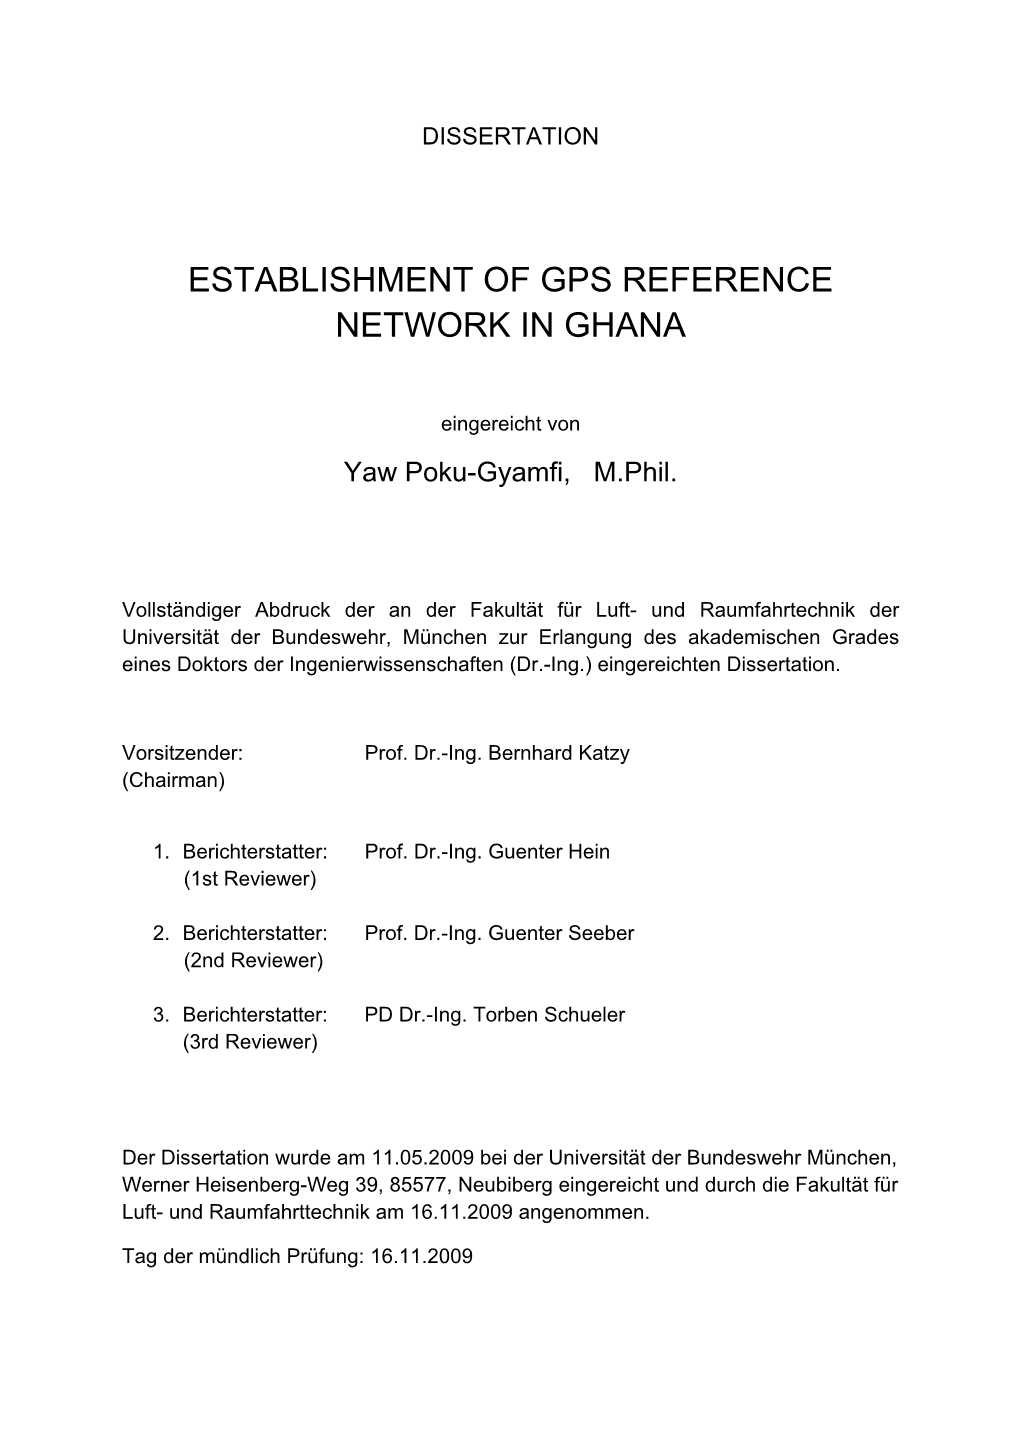 Establishment of Gps Reference Network in Ghana